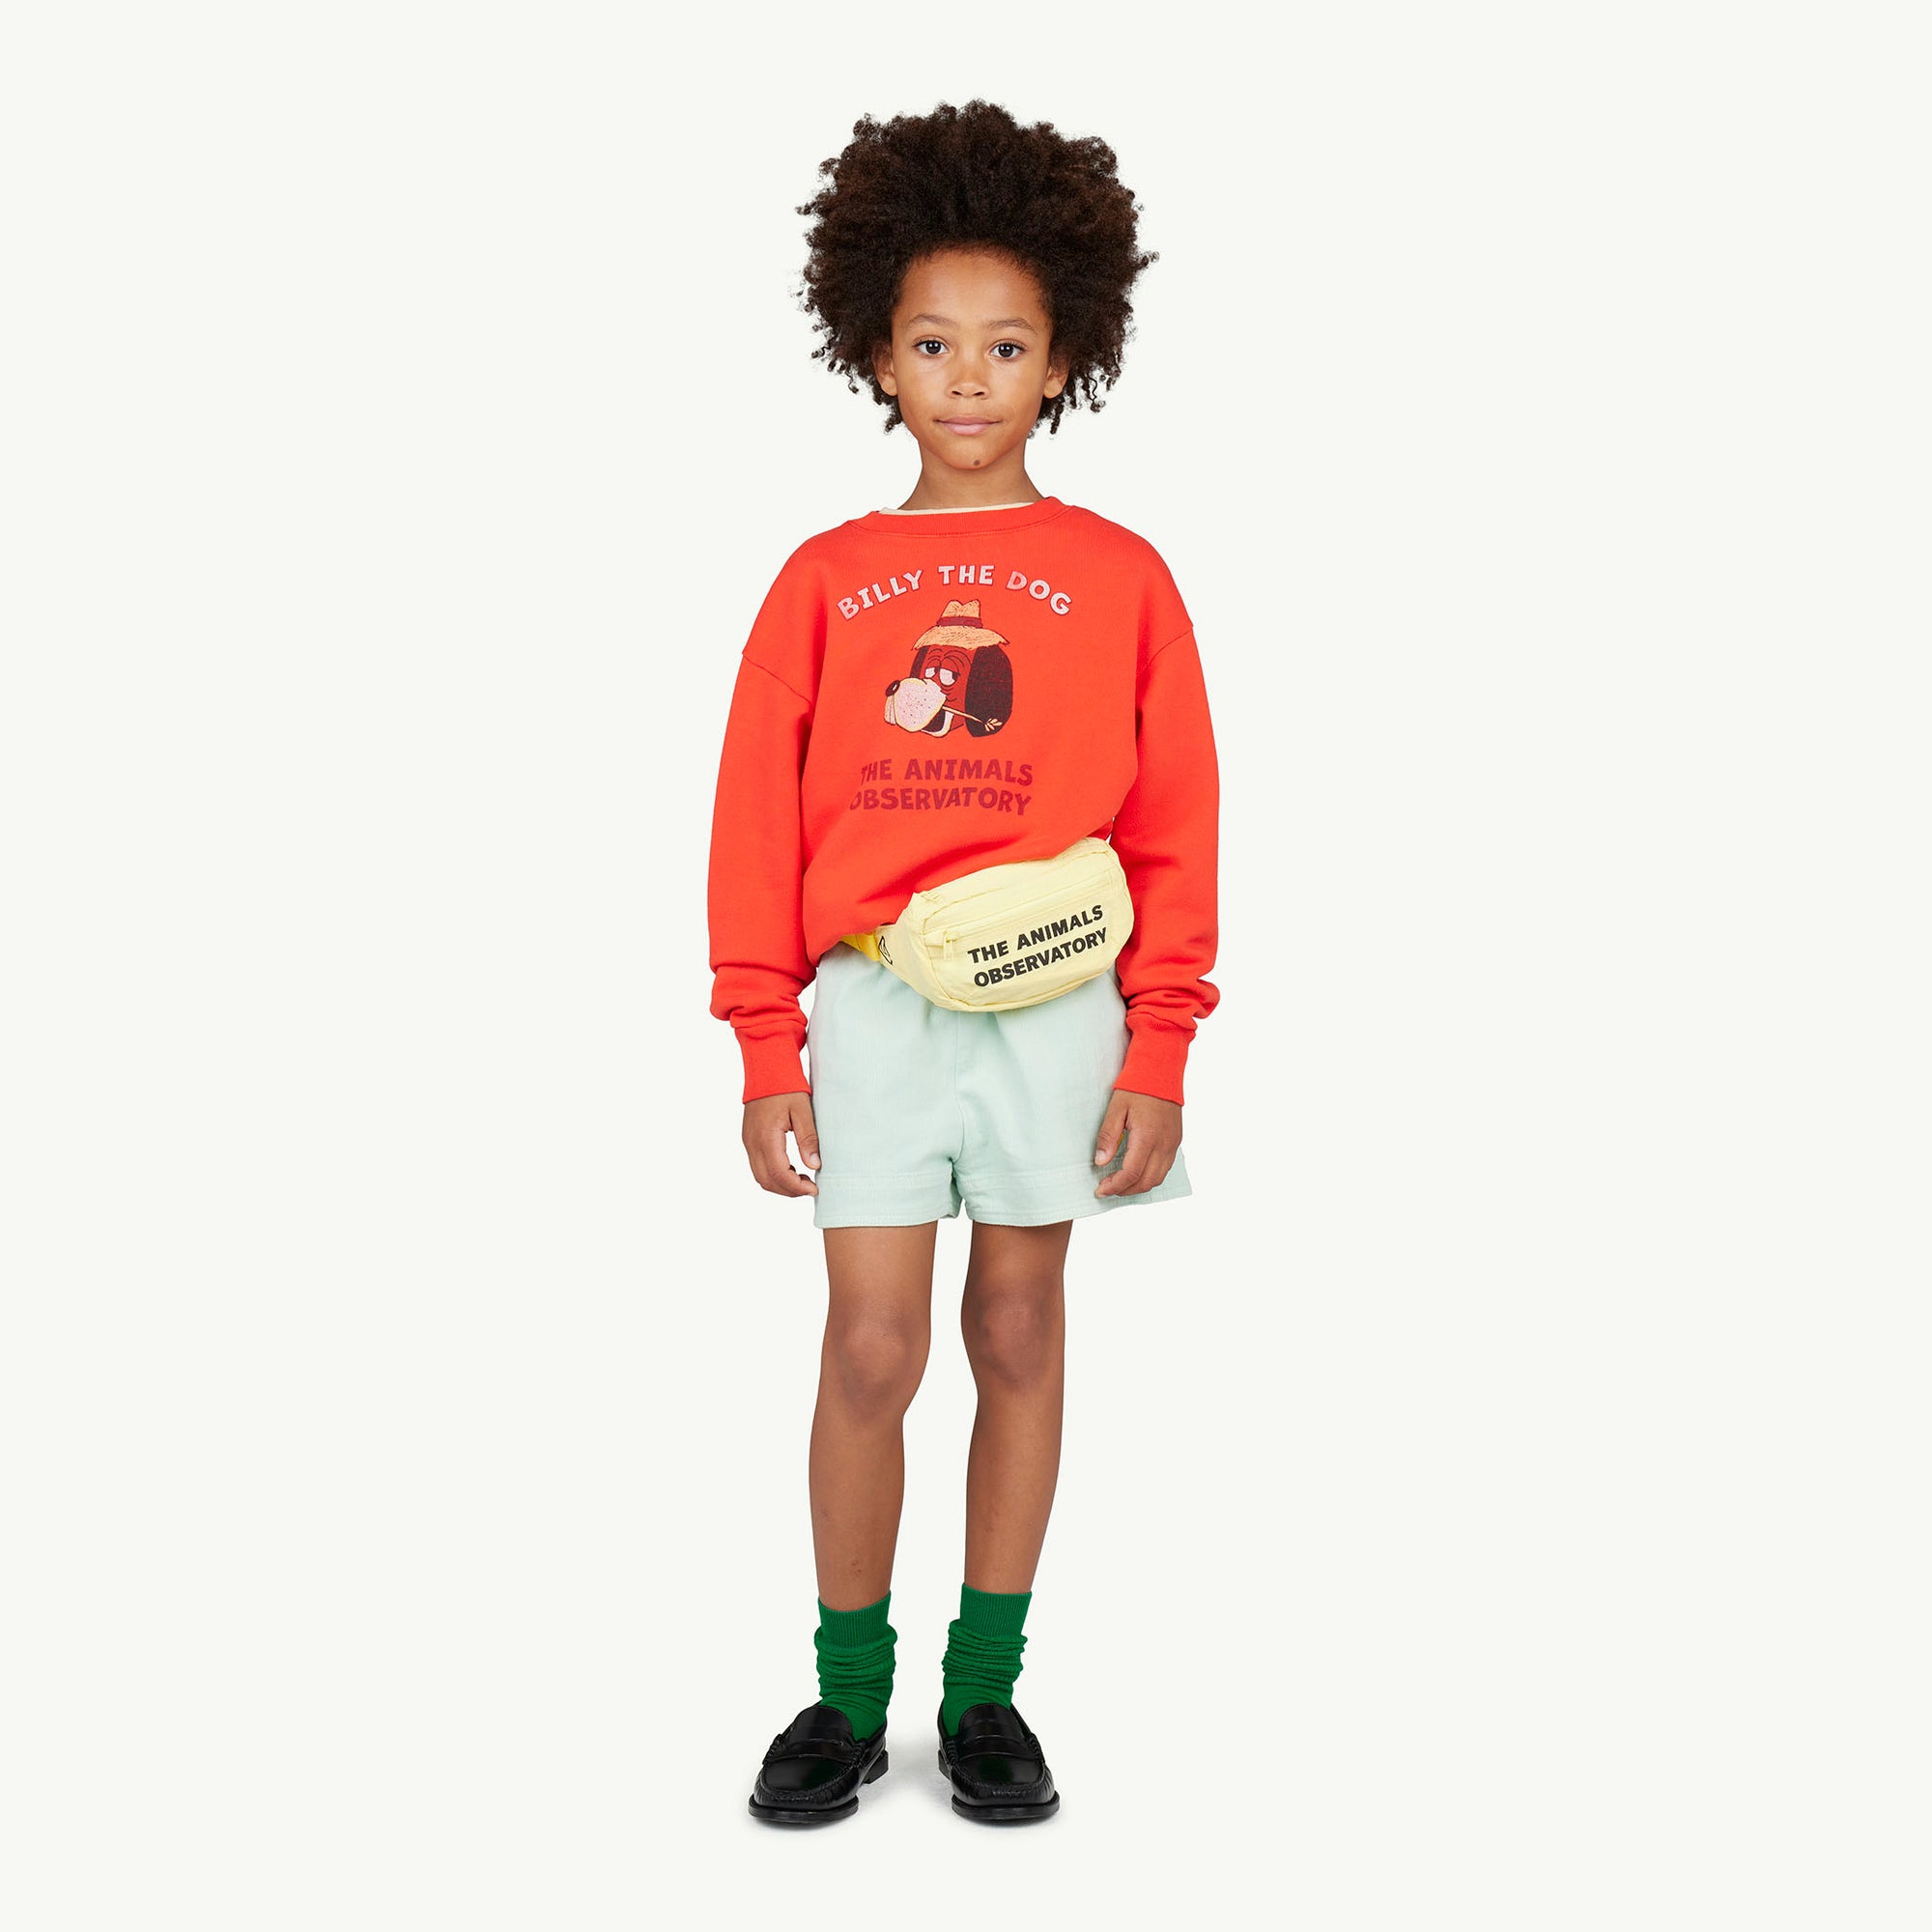 Boys & Girls Red Printed Cotton Sweatshirt